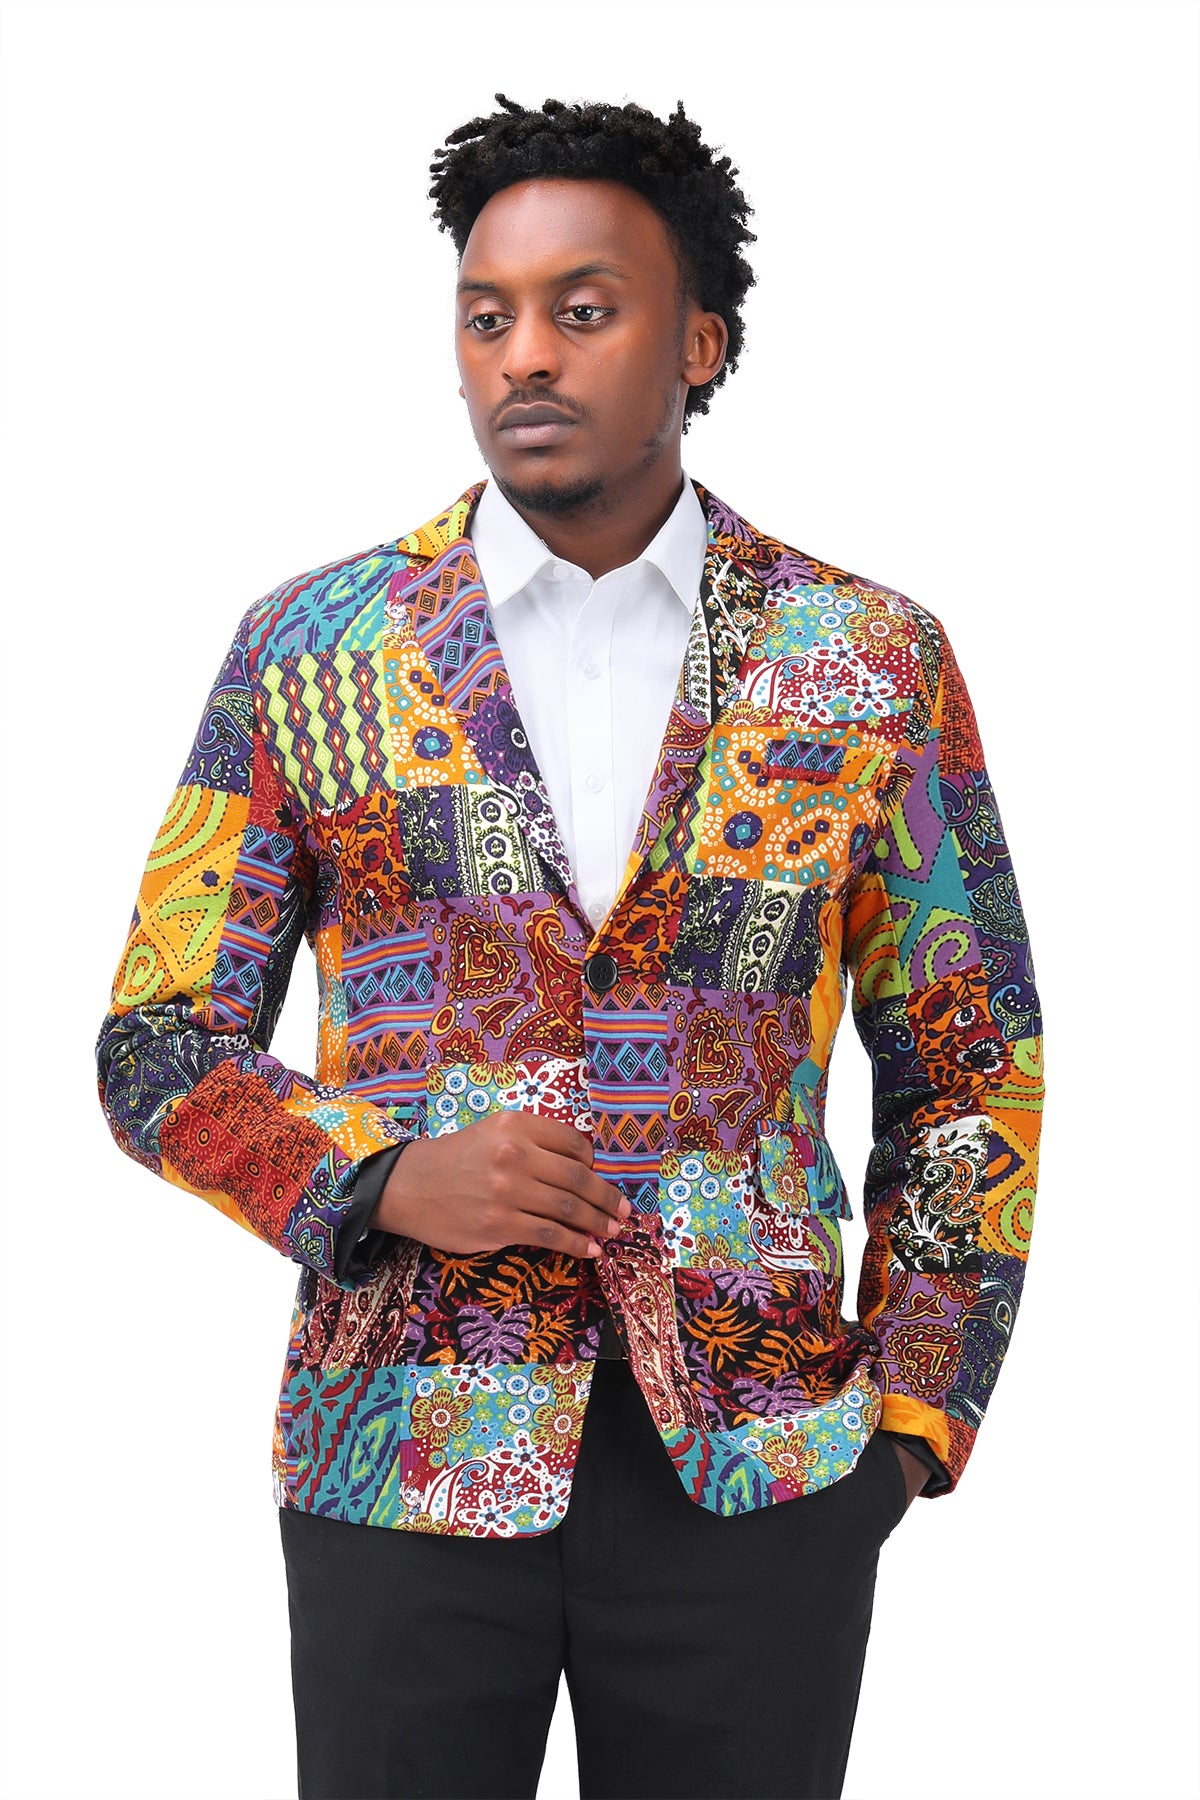 Mens Suit Jacket Floral Printed Casual Blazer Coat Canvas